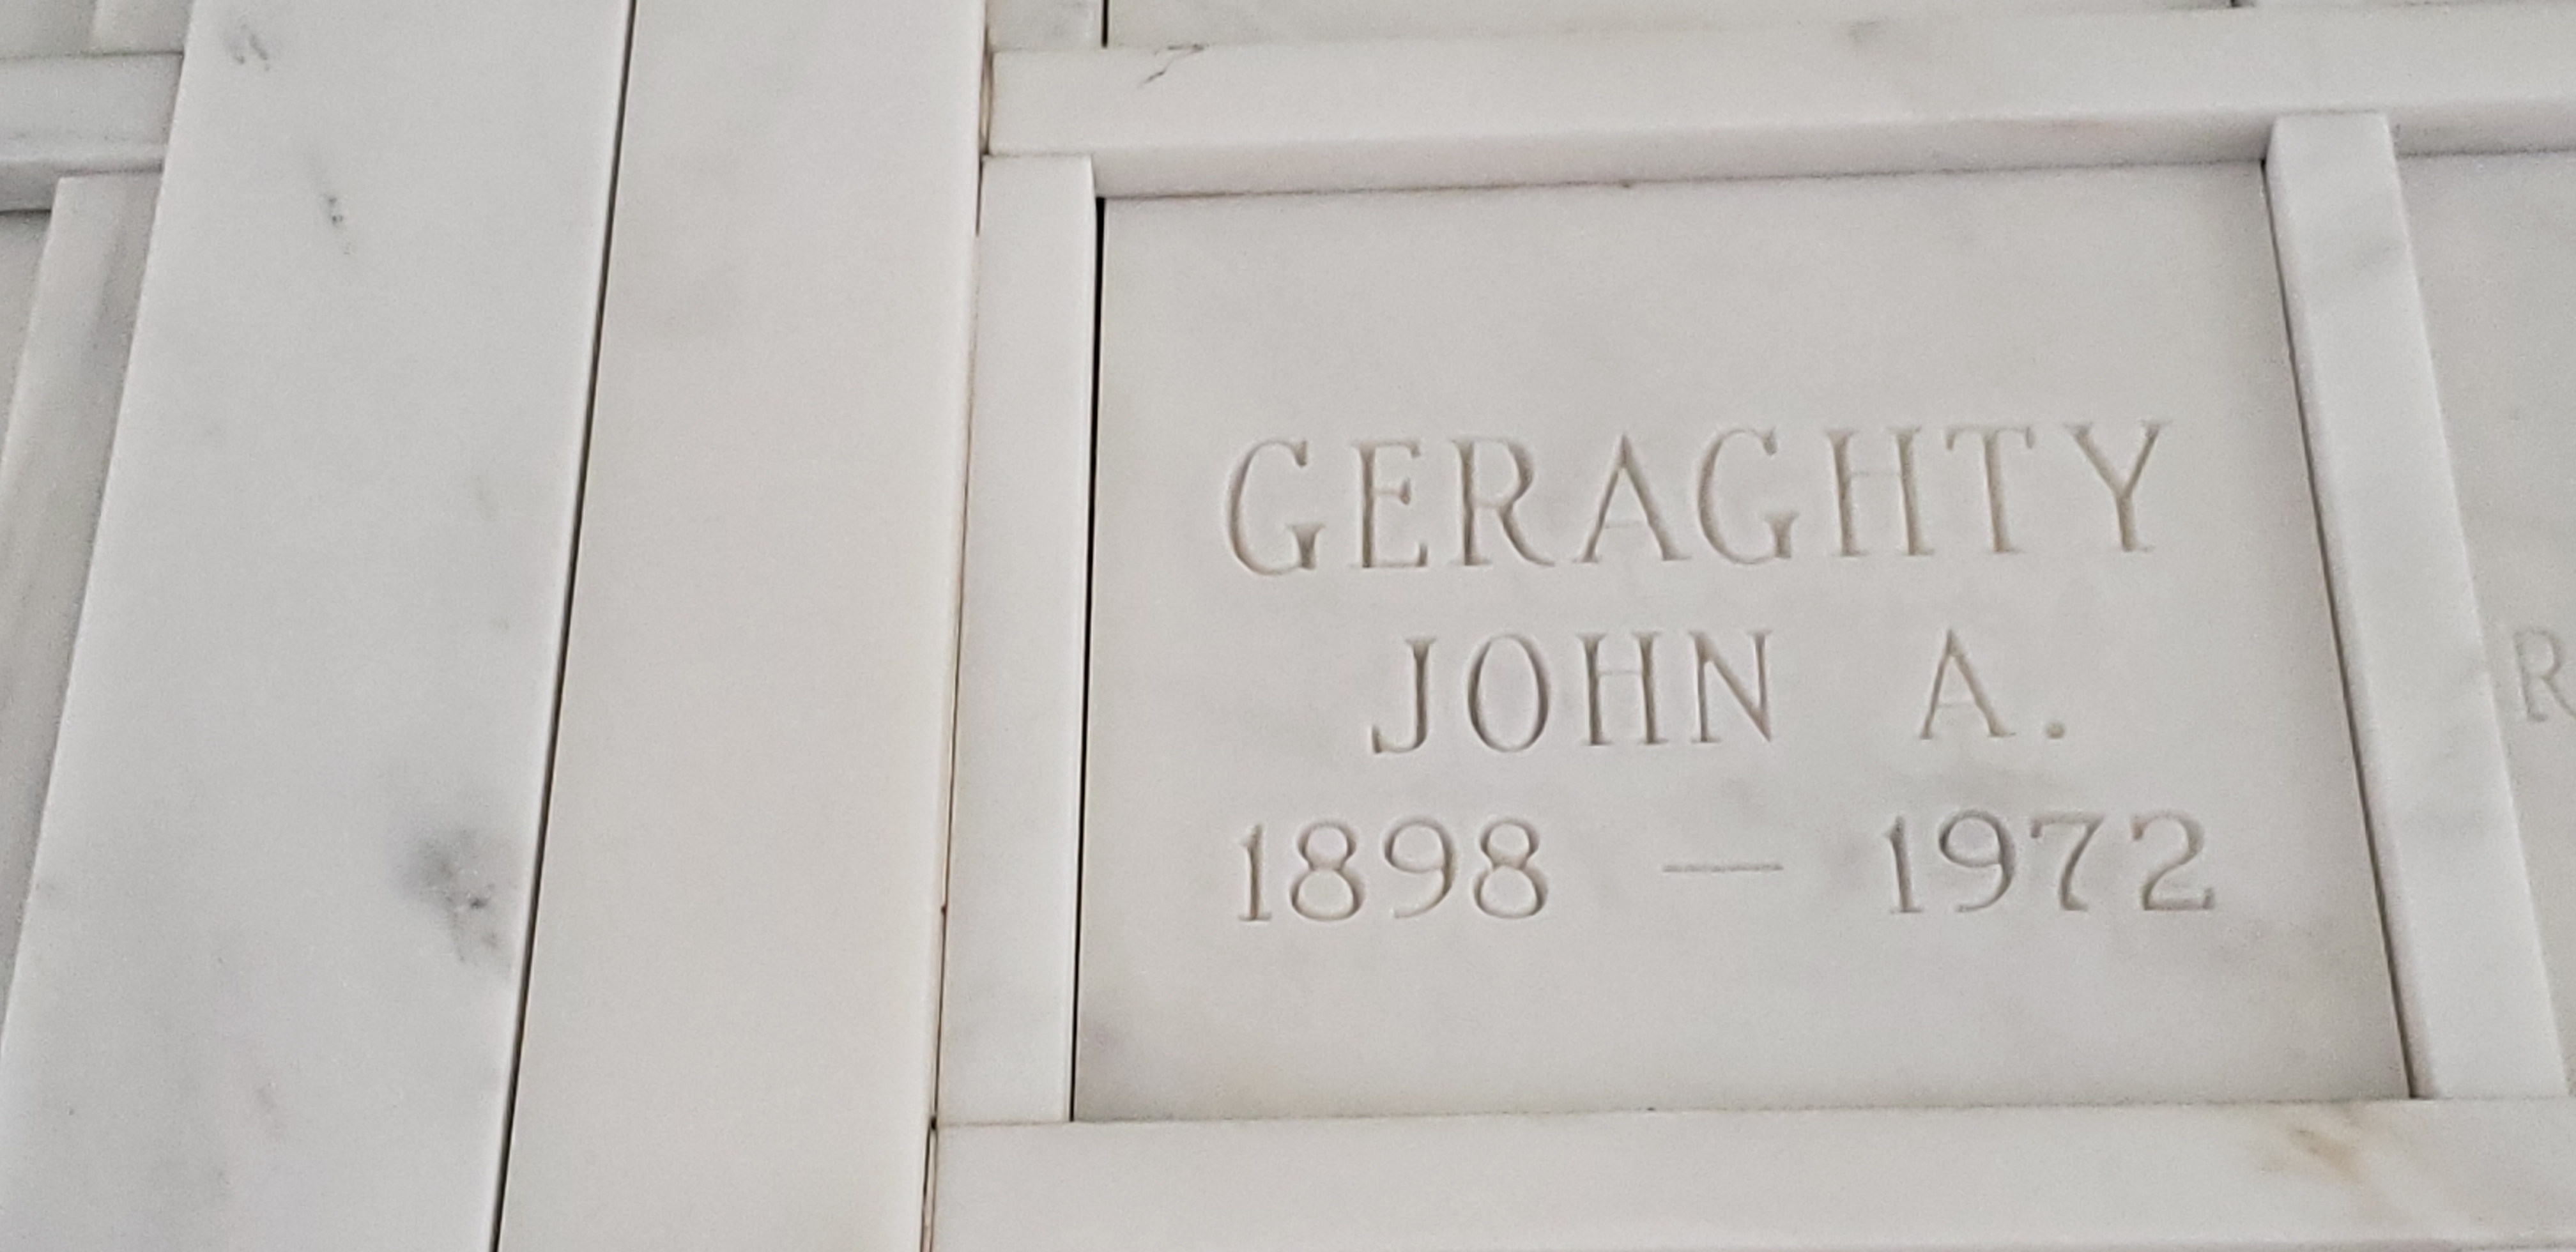 John A Geraghty